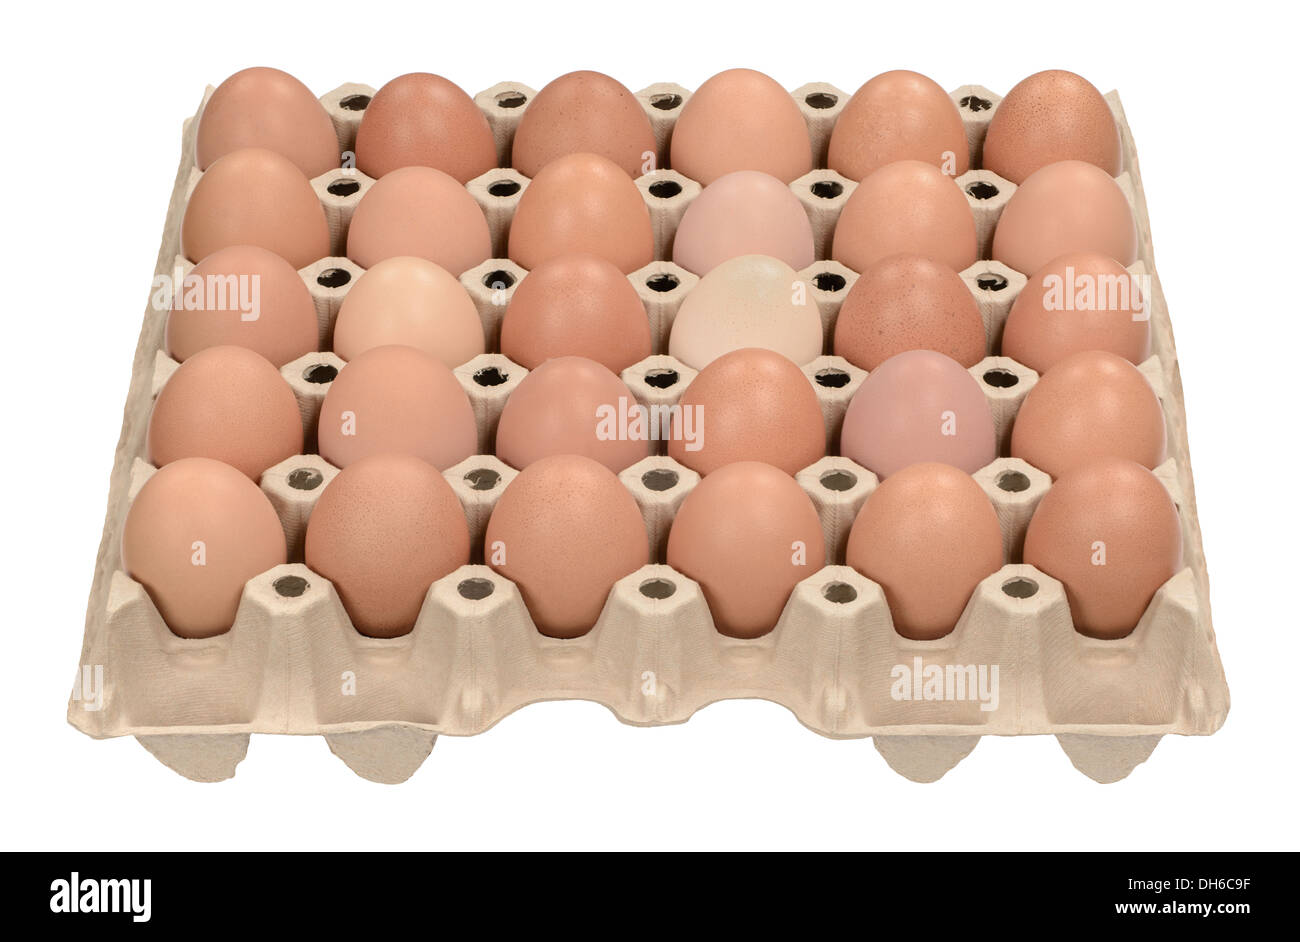 30 fresh brown eggs in pallet carton Stock Photo